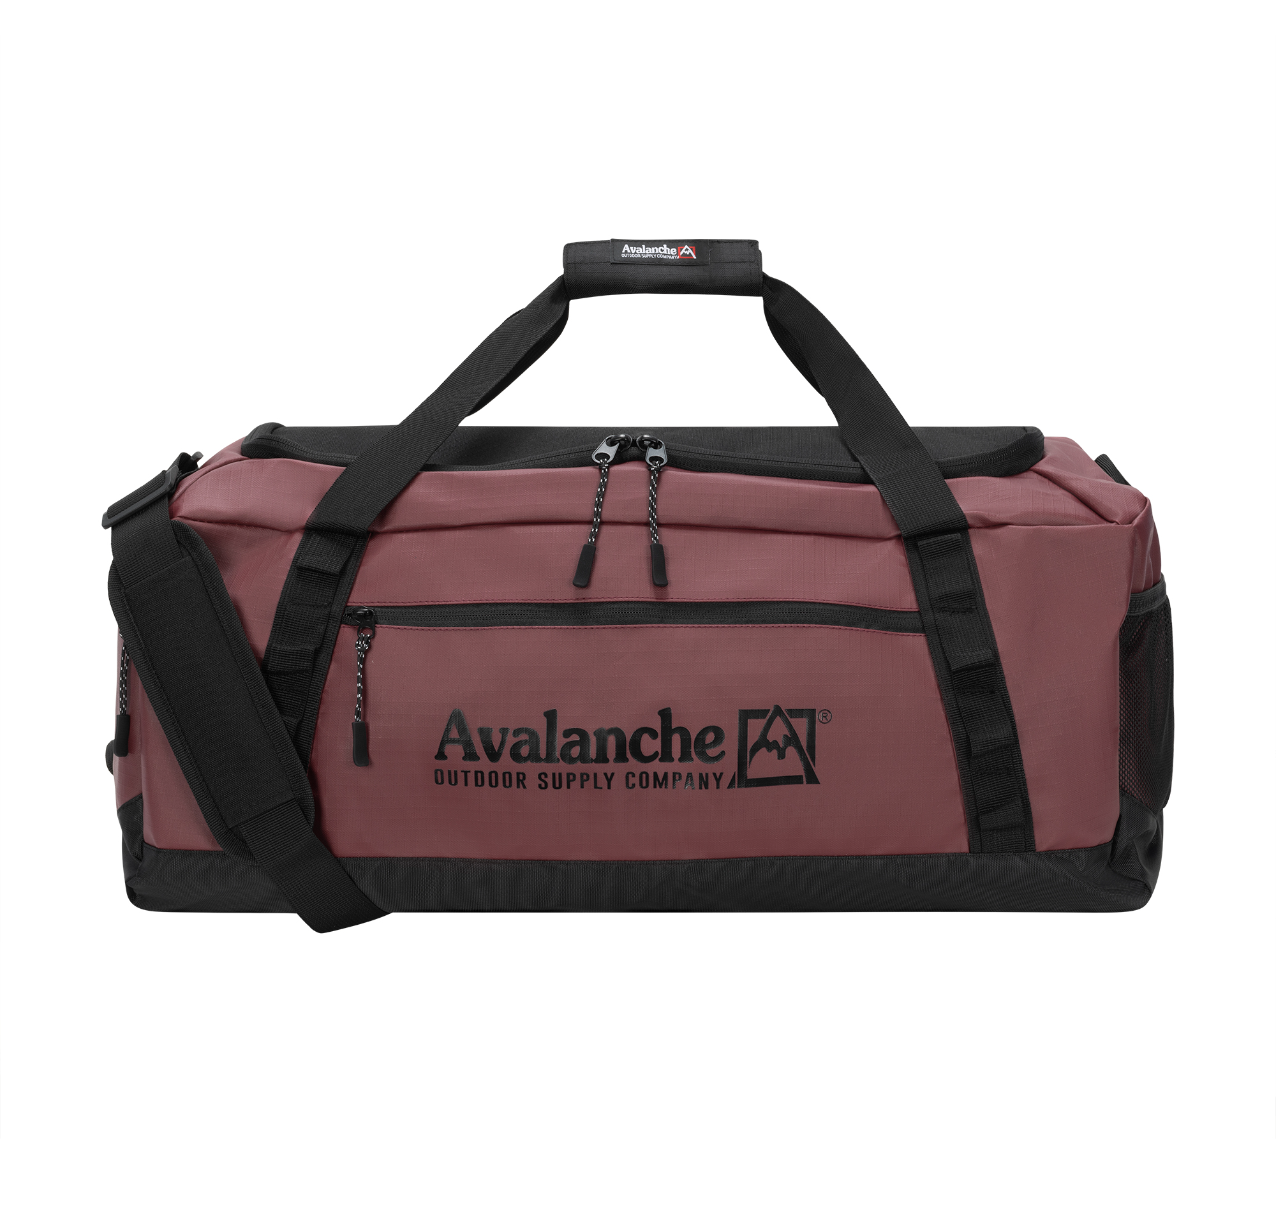 Avalanche outdoor supply - Gem